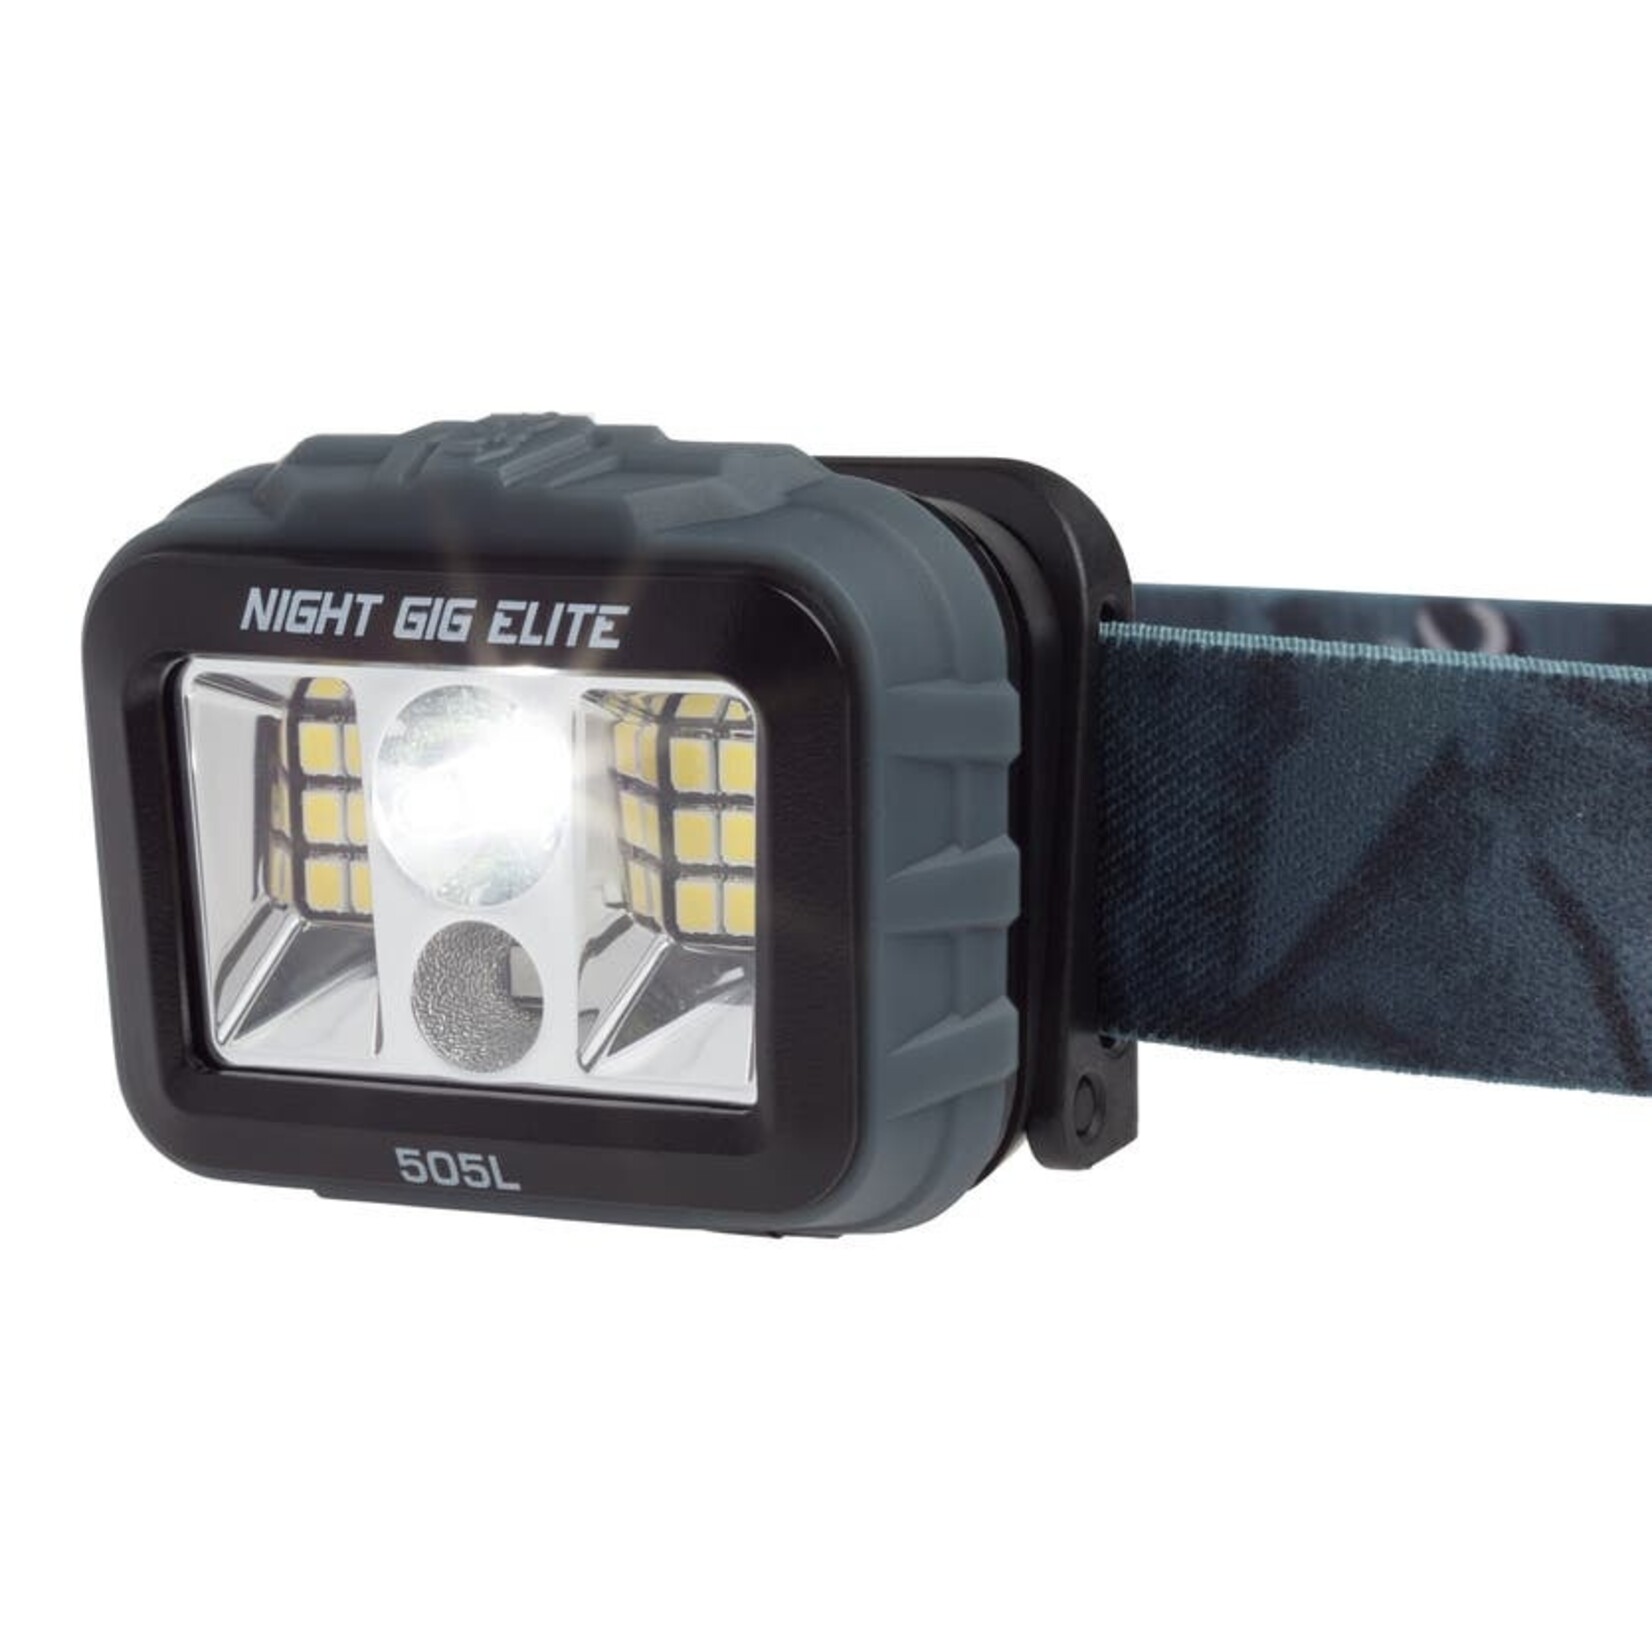 BROWNING Lampe Frontale Browning Night Gig Elite 505 Lumens